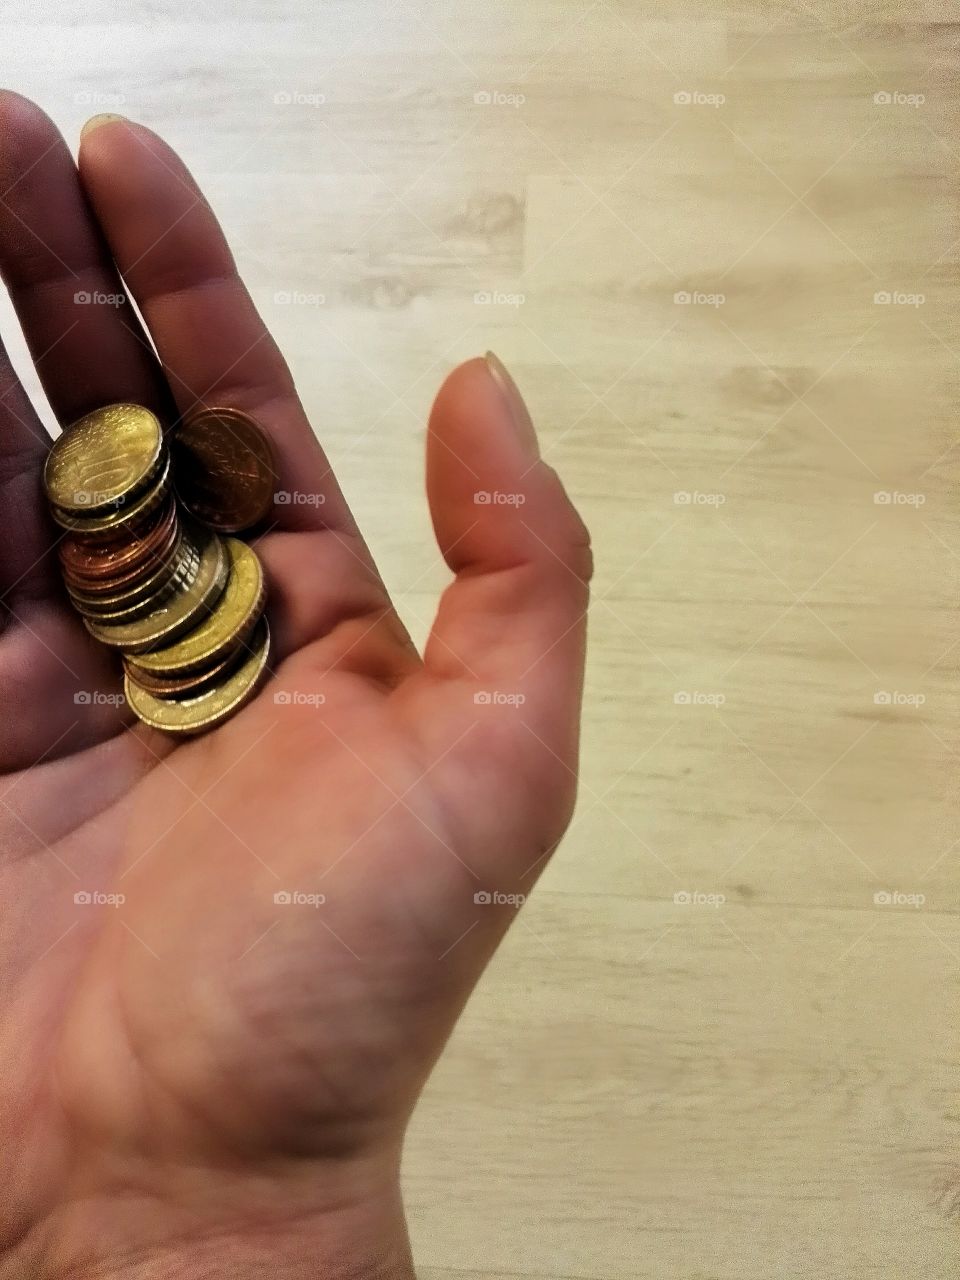 money in the hand